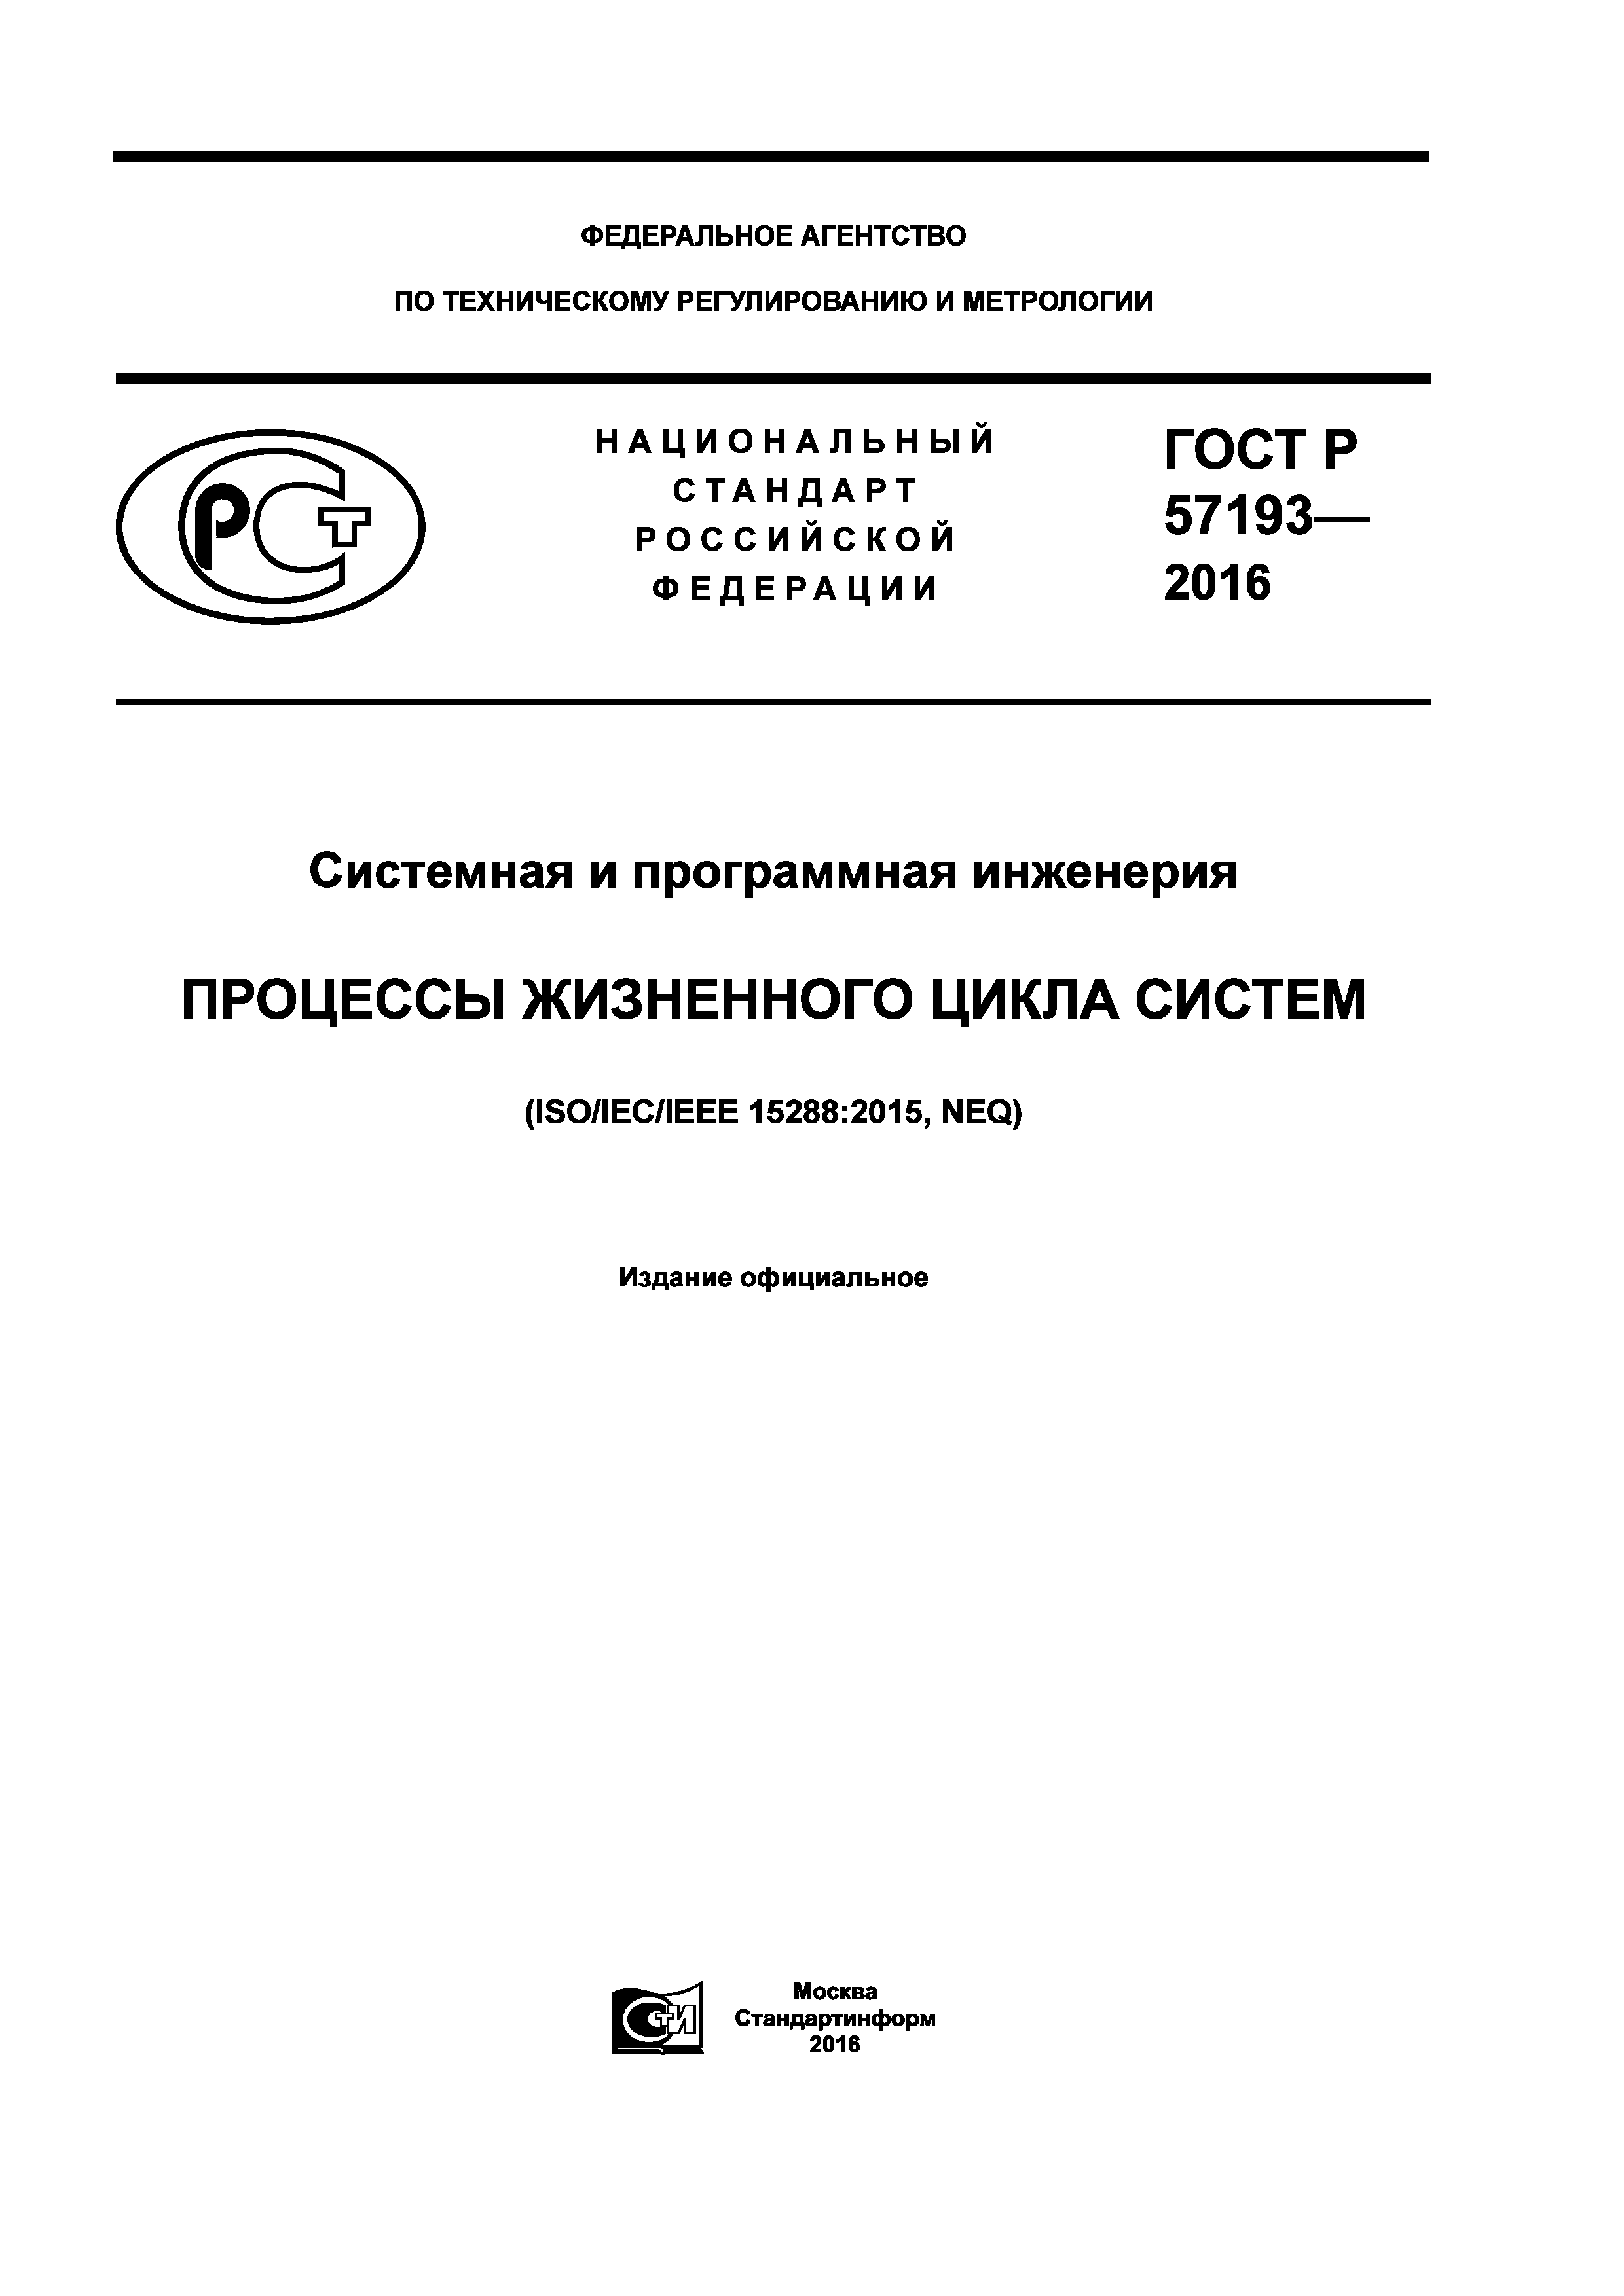 ГОСТ Р 57193-2016